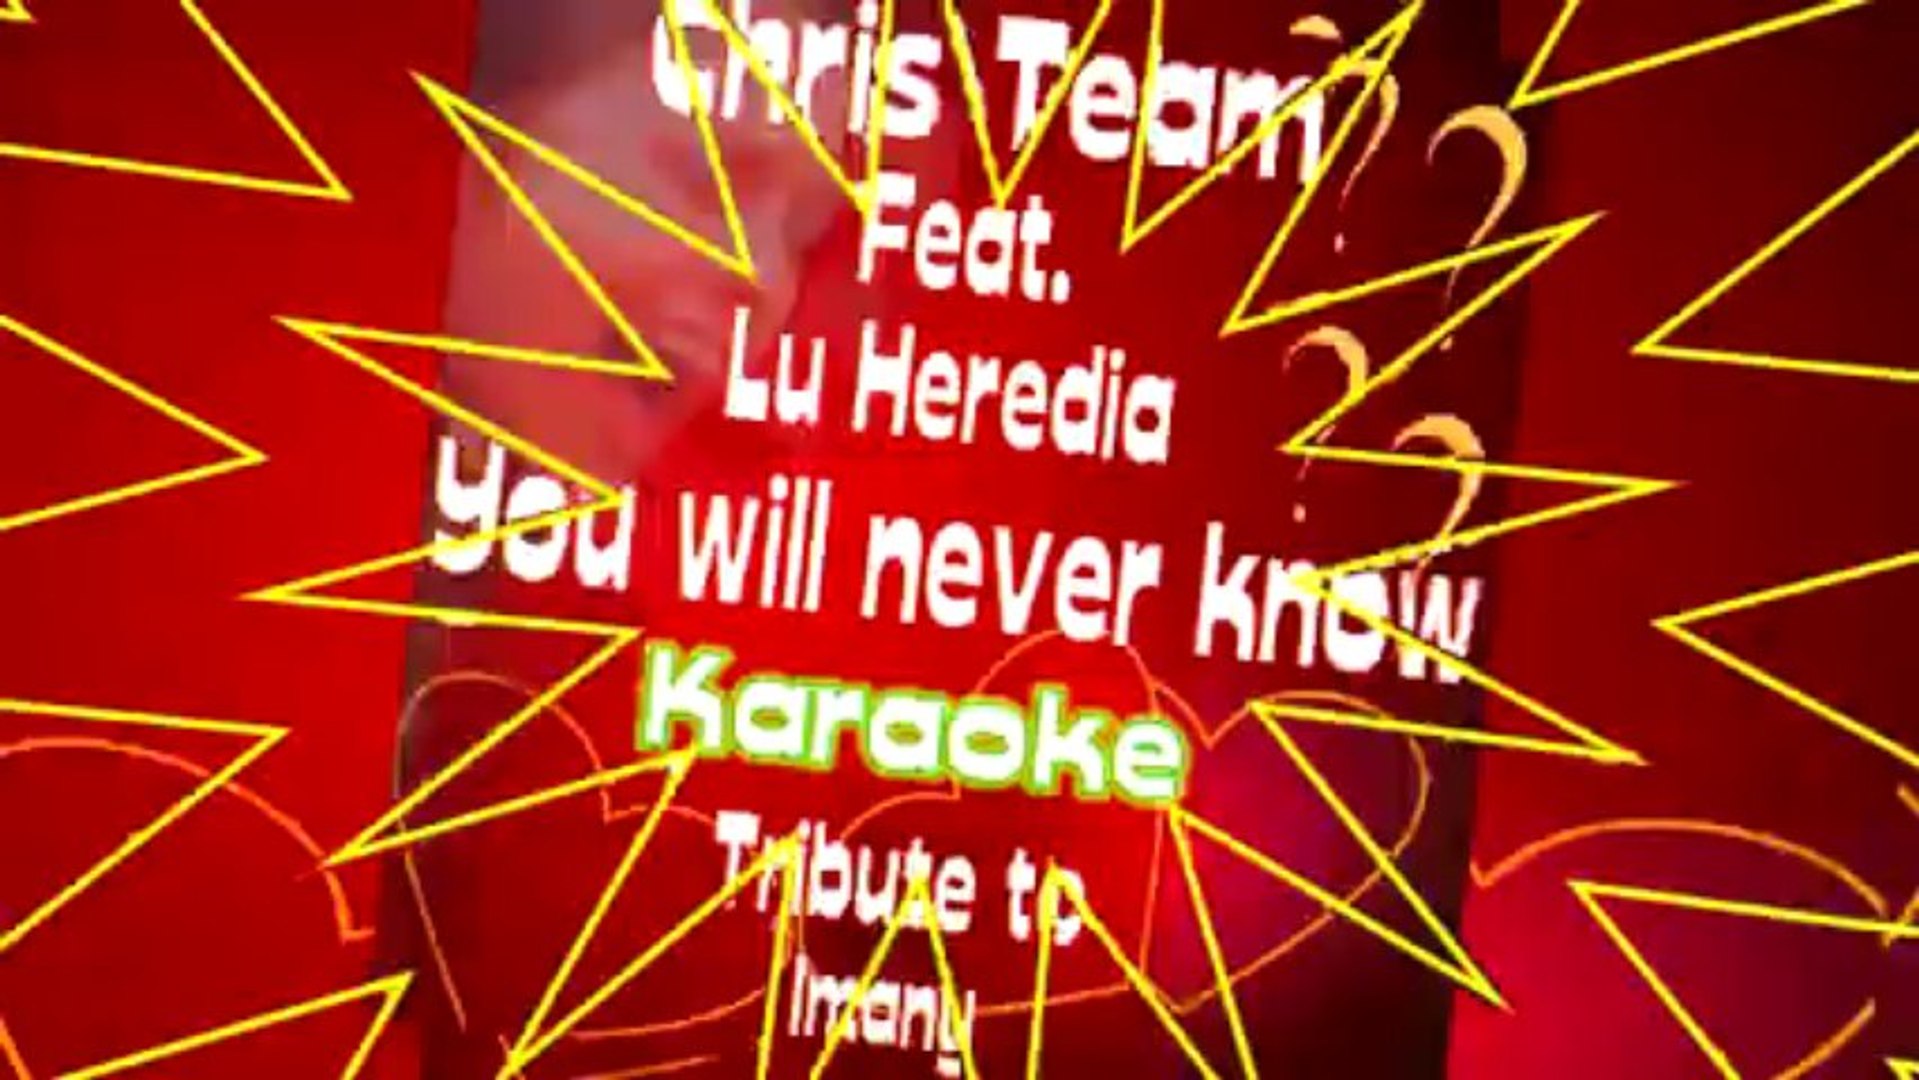 Chris Team Feat. Lu Heredia - You Will Never Know - Karaoke Tribute to Imany  - Vidéo Dailymotion